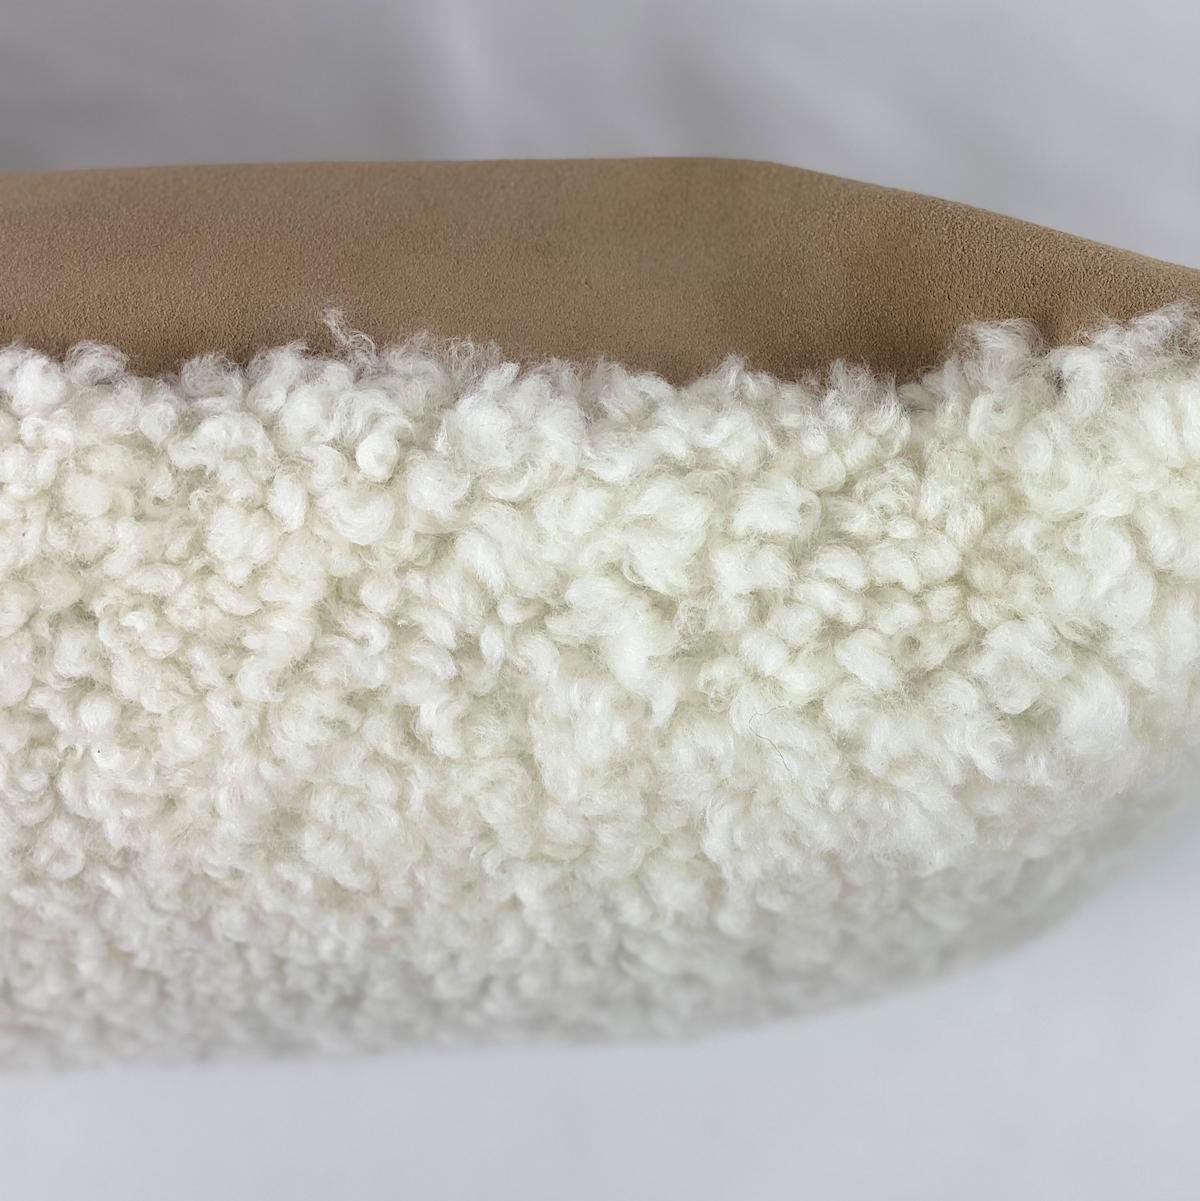 Shearling-Kissen, weißes Schafsfell, quadratisch, 18x18 Zoll  40 x 40 cm  (Handgefertigt) im Angebot